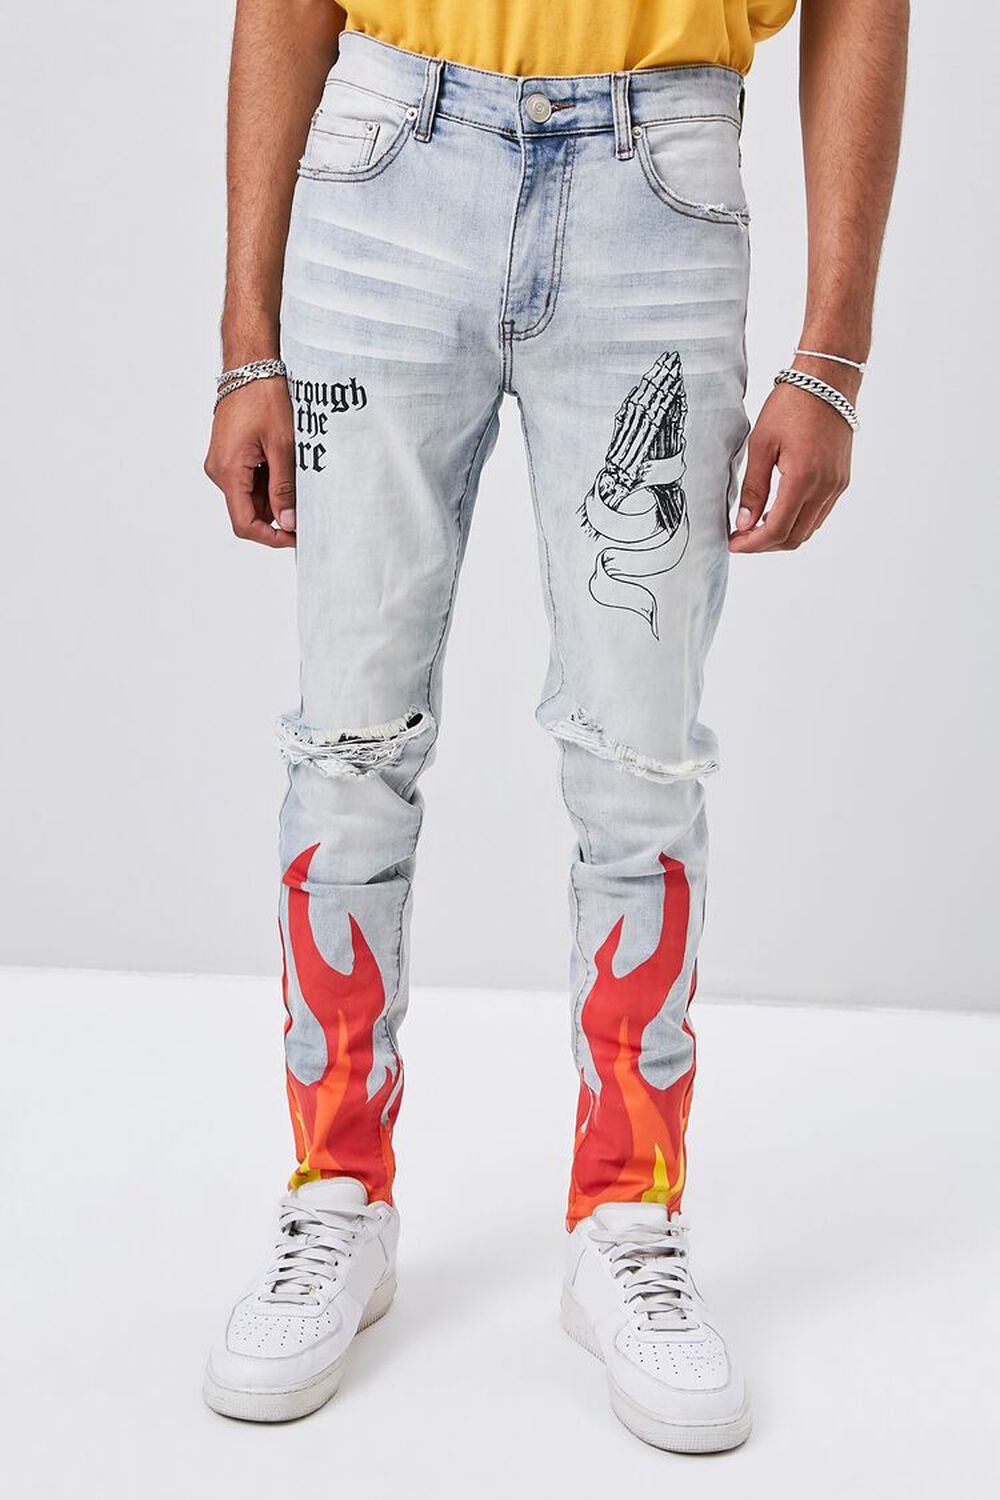 LIGHT DENIM/MULTI Flame Graphic Distressed Jeans, image 2